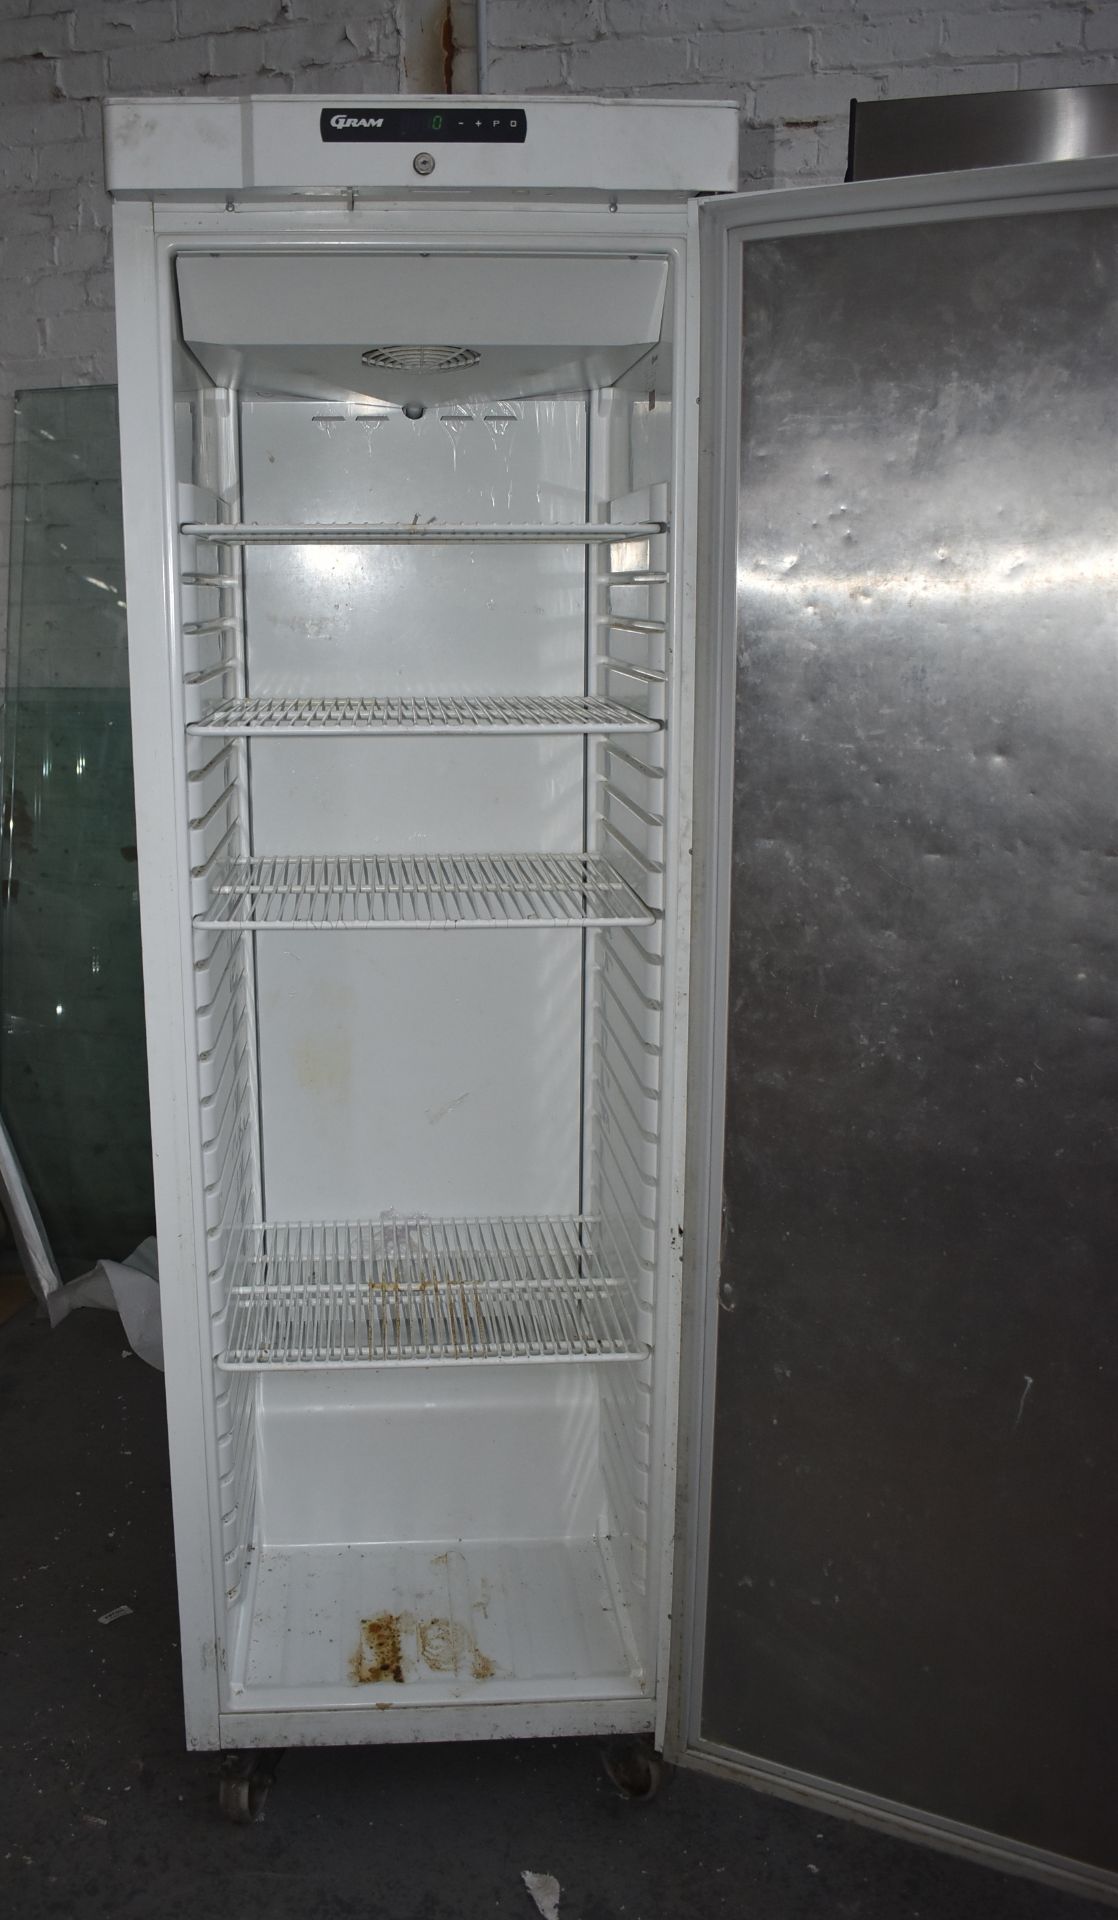 1 x Gram Single Door Commercial Upright Refrigerator - 359Ltr Capacity - Type: K 420 LG - Image 7 of 11